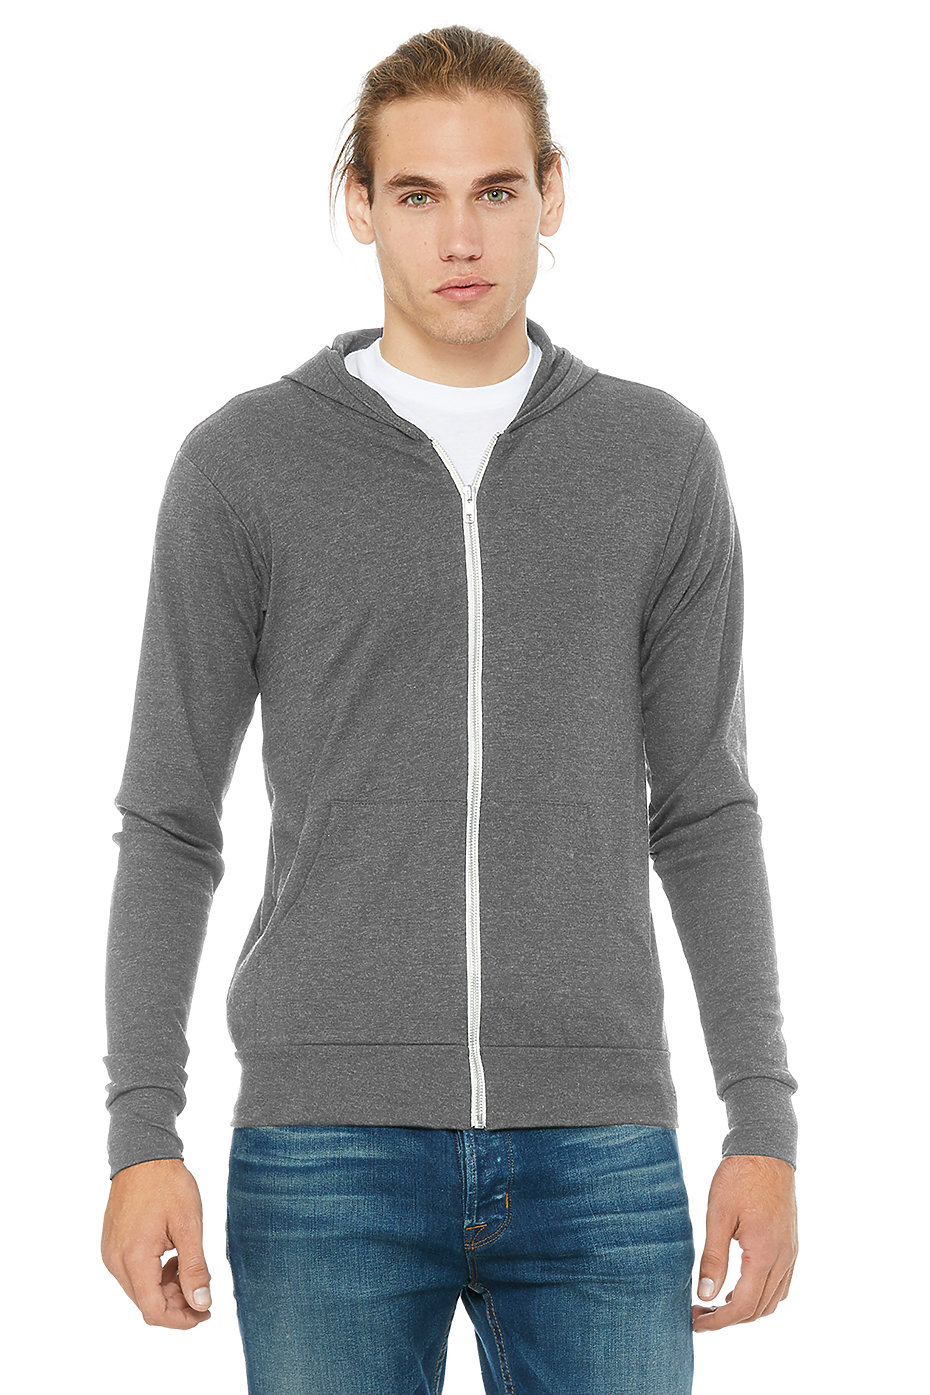 personalized zip up sweatshirts